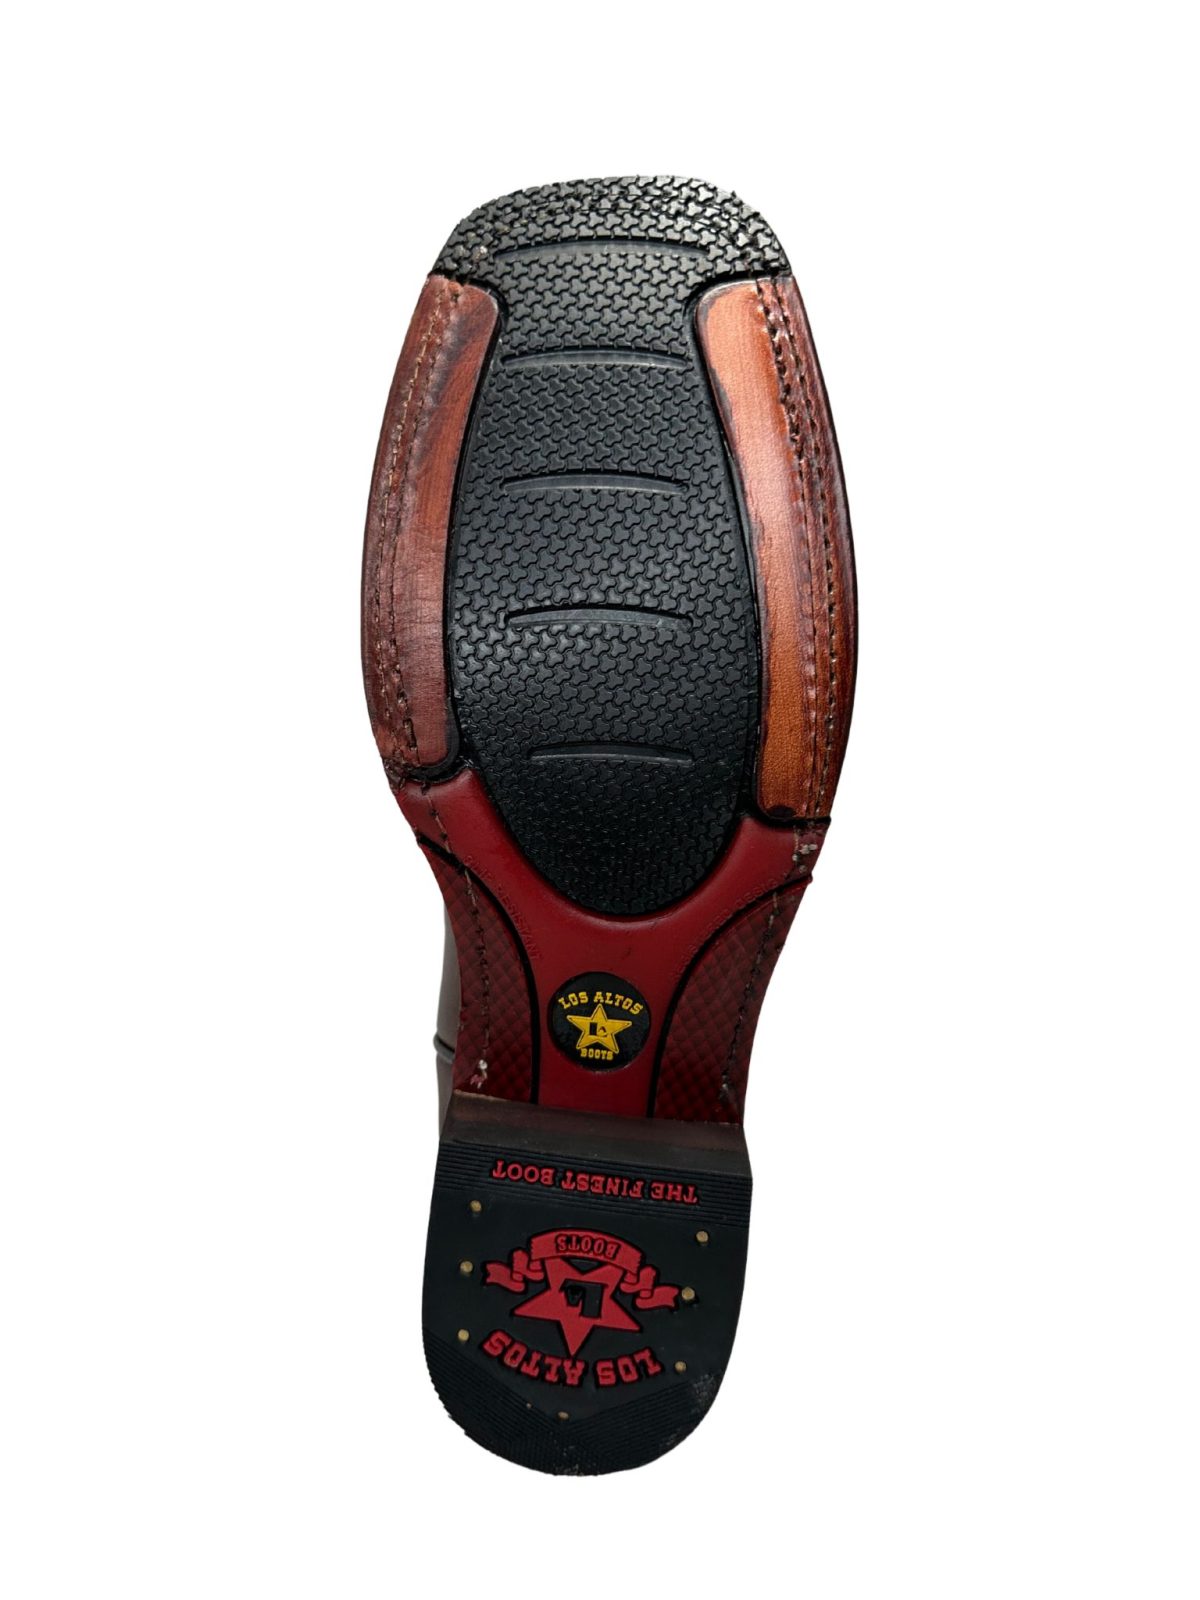 Los Altos Men's Brown Square Toe Rubber Sole Leather Boot